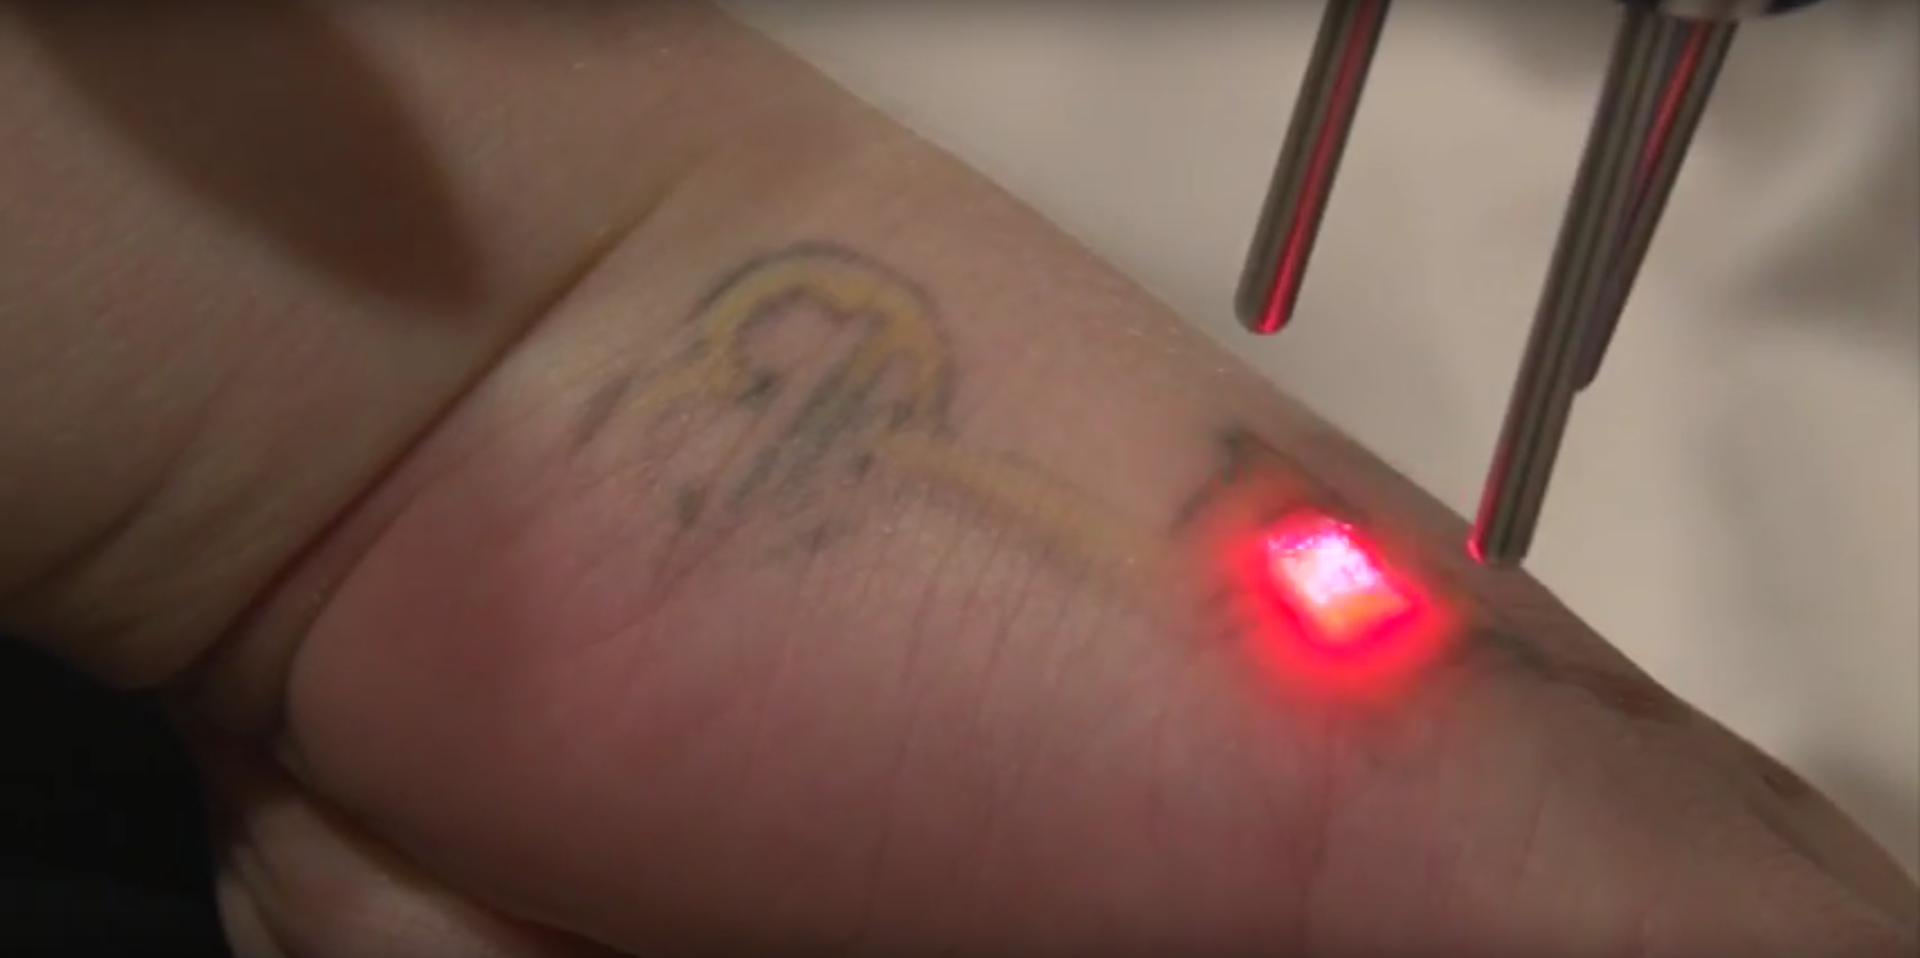 man gets tattoo lasered off